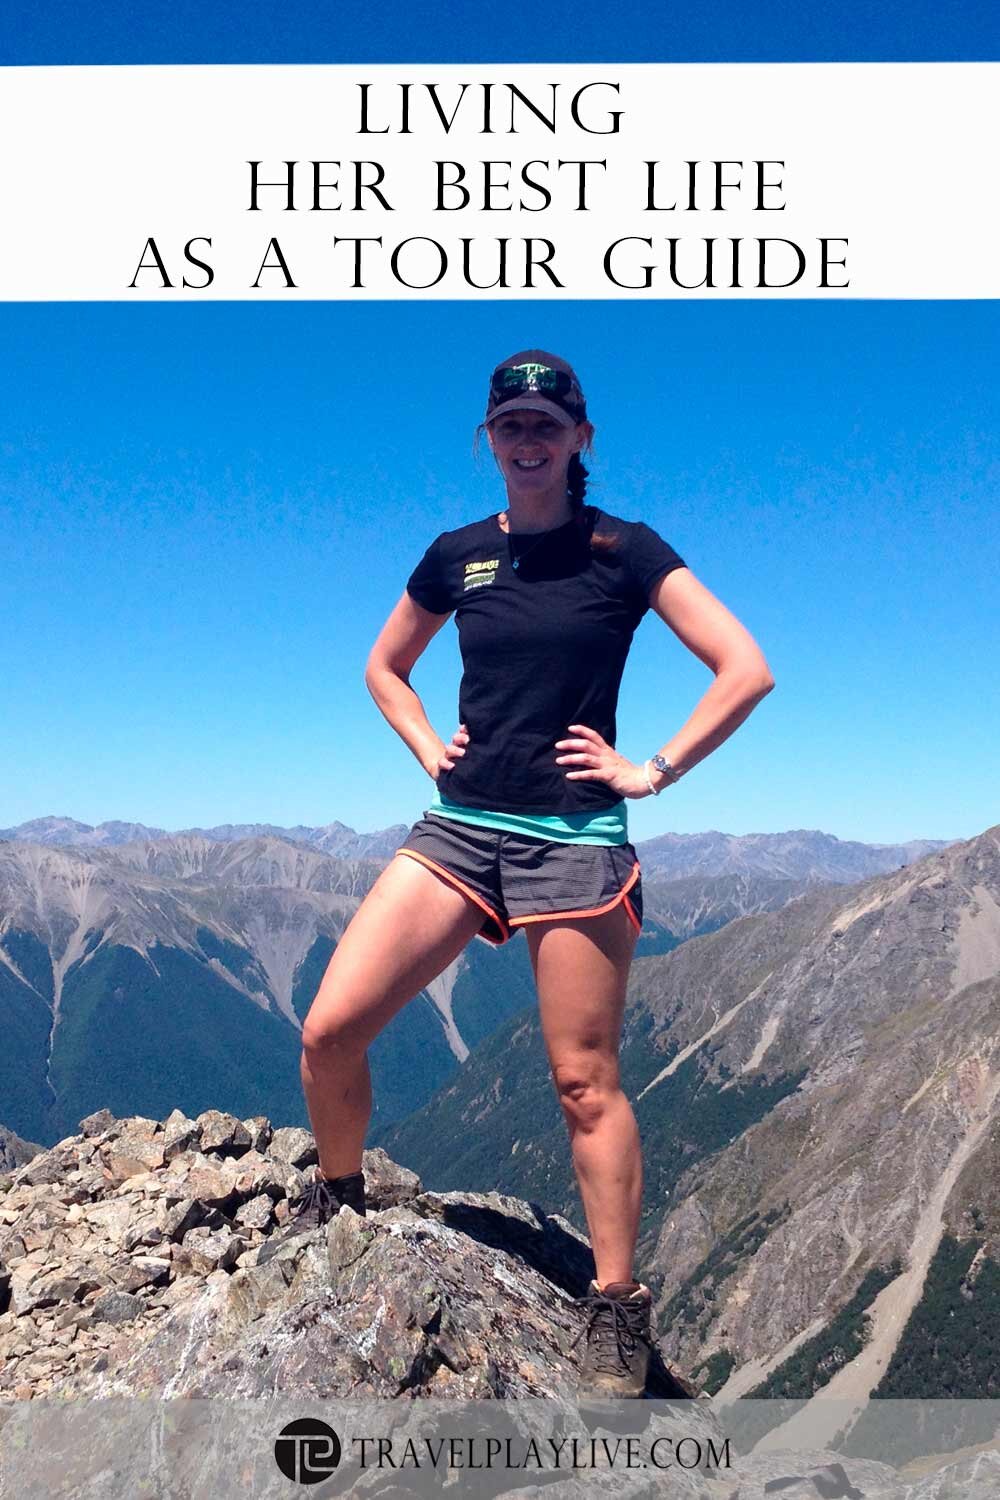 Amanda-Tutton-Active-Adventure-guide2.jpg